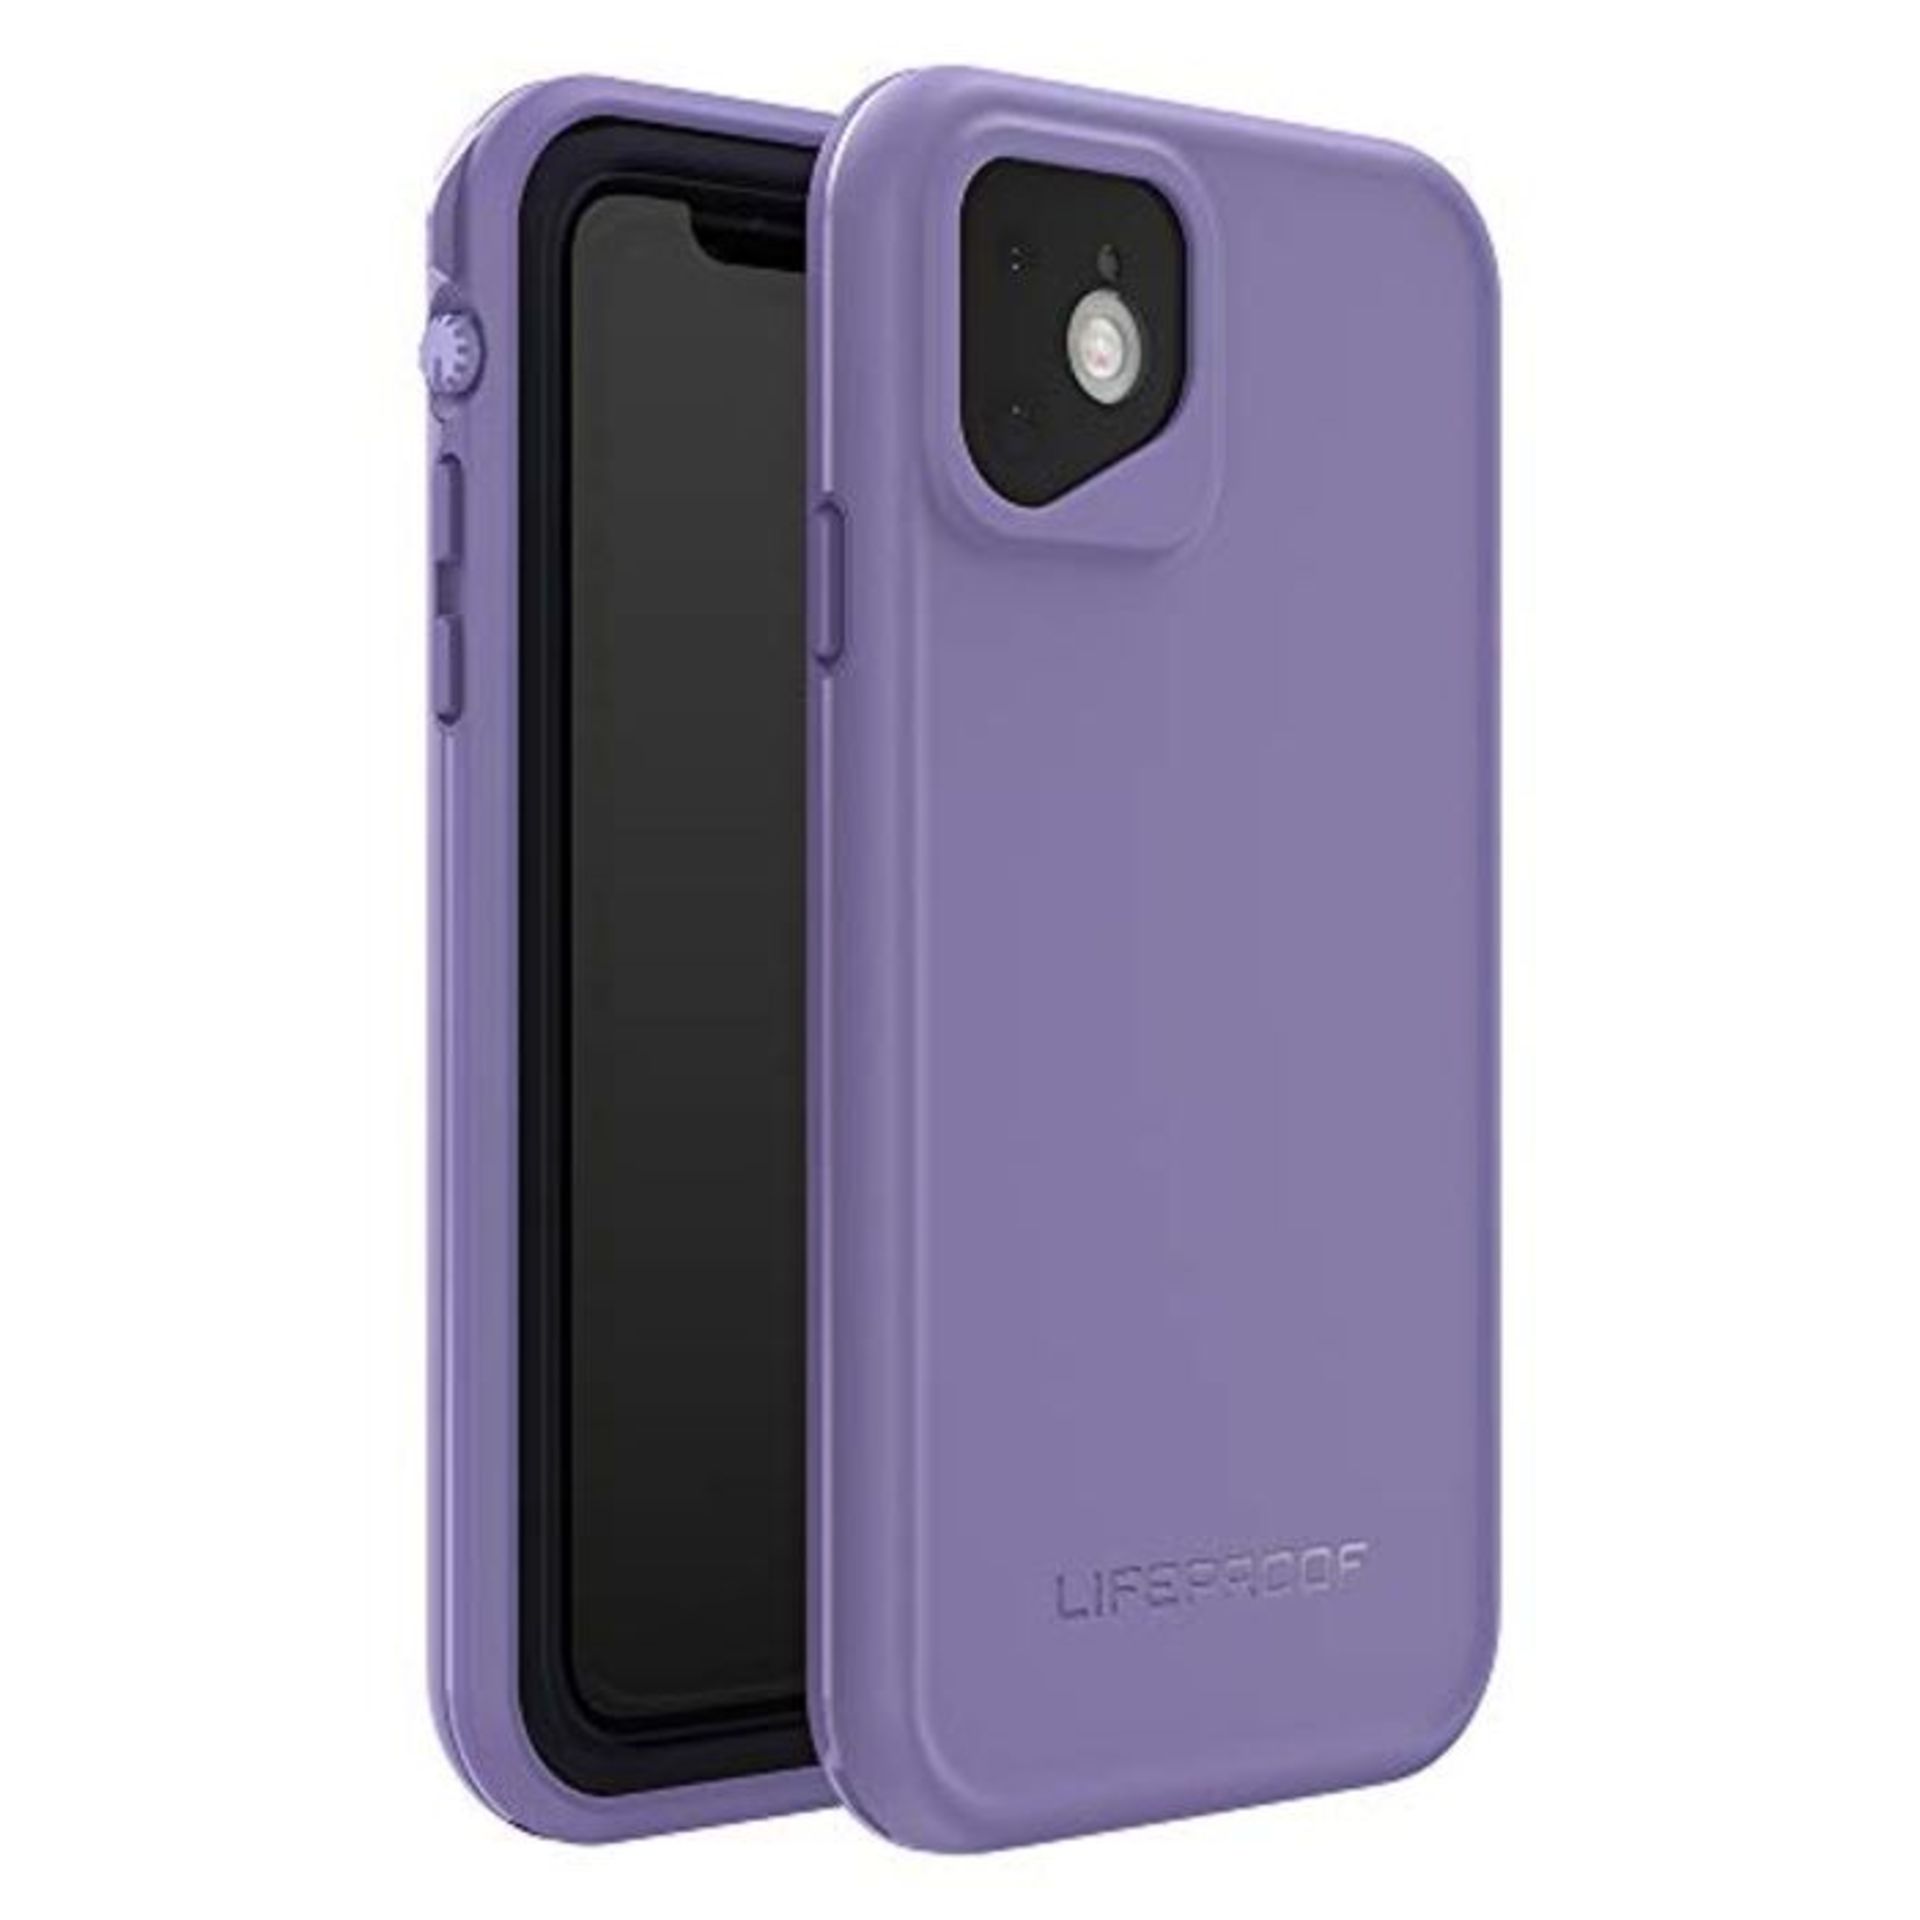 RRP £69.00 LifeProof for iPhone 11, Waterproof Drop Protective Case, Fre Series, Purple